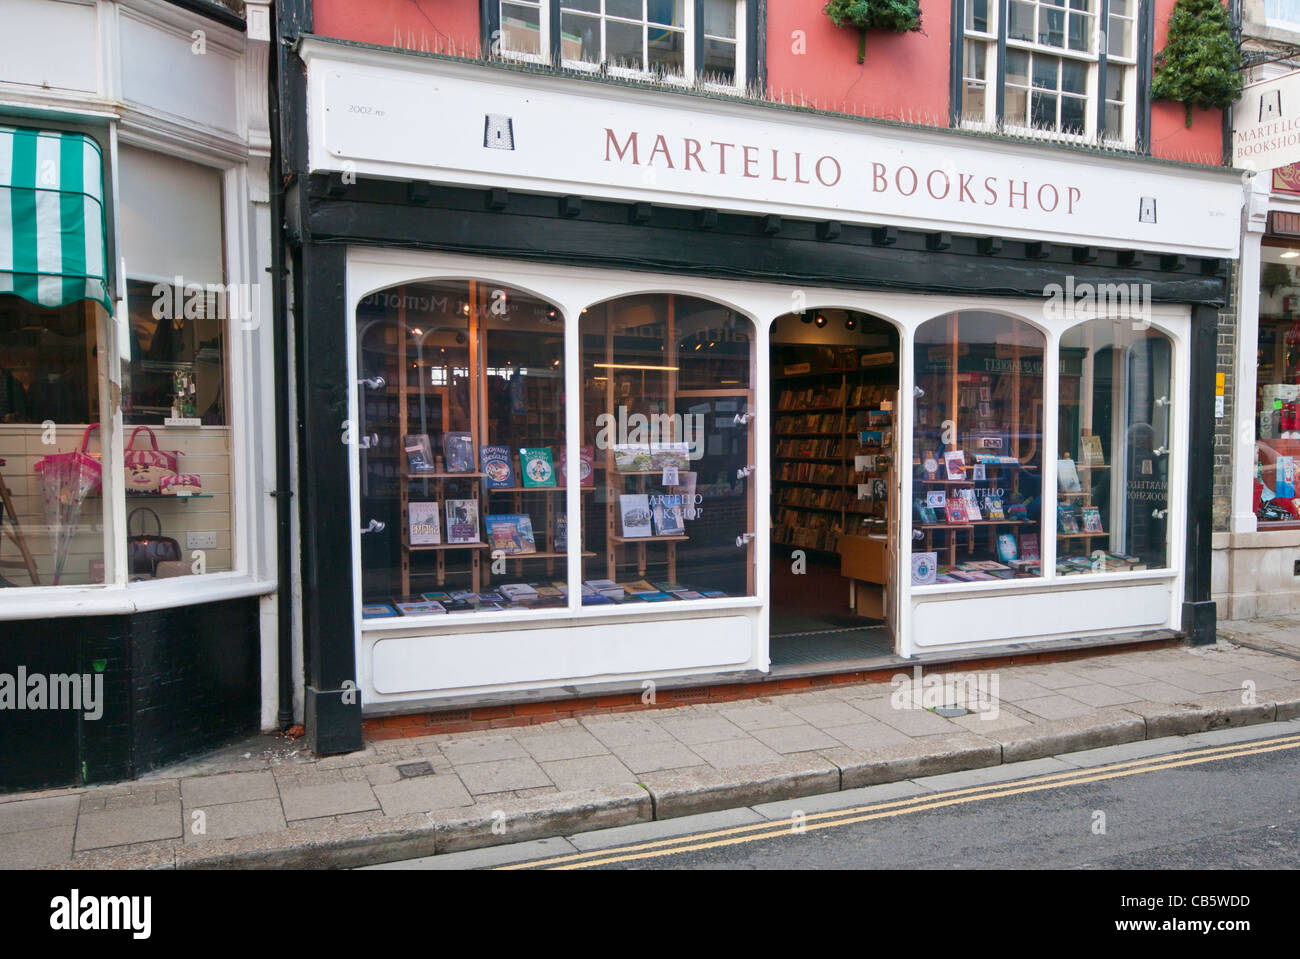 Martello Bookshop High Street Rye East Sussex England Uk Bookshops Shopfront Stock Photo